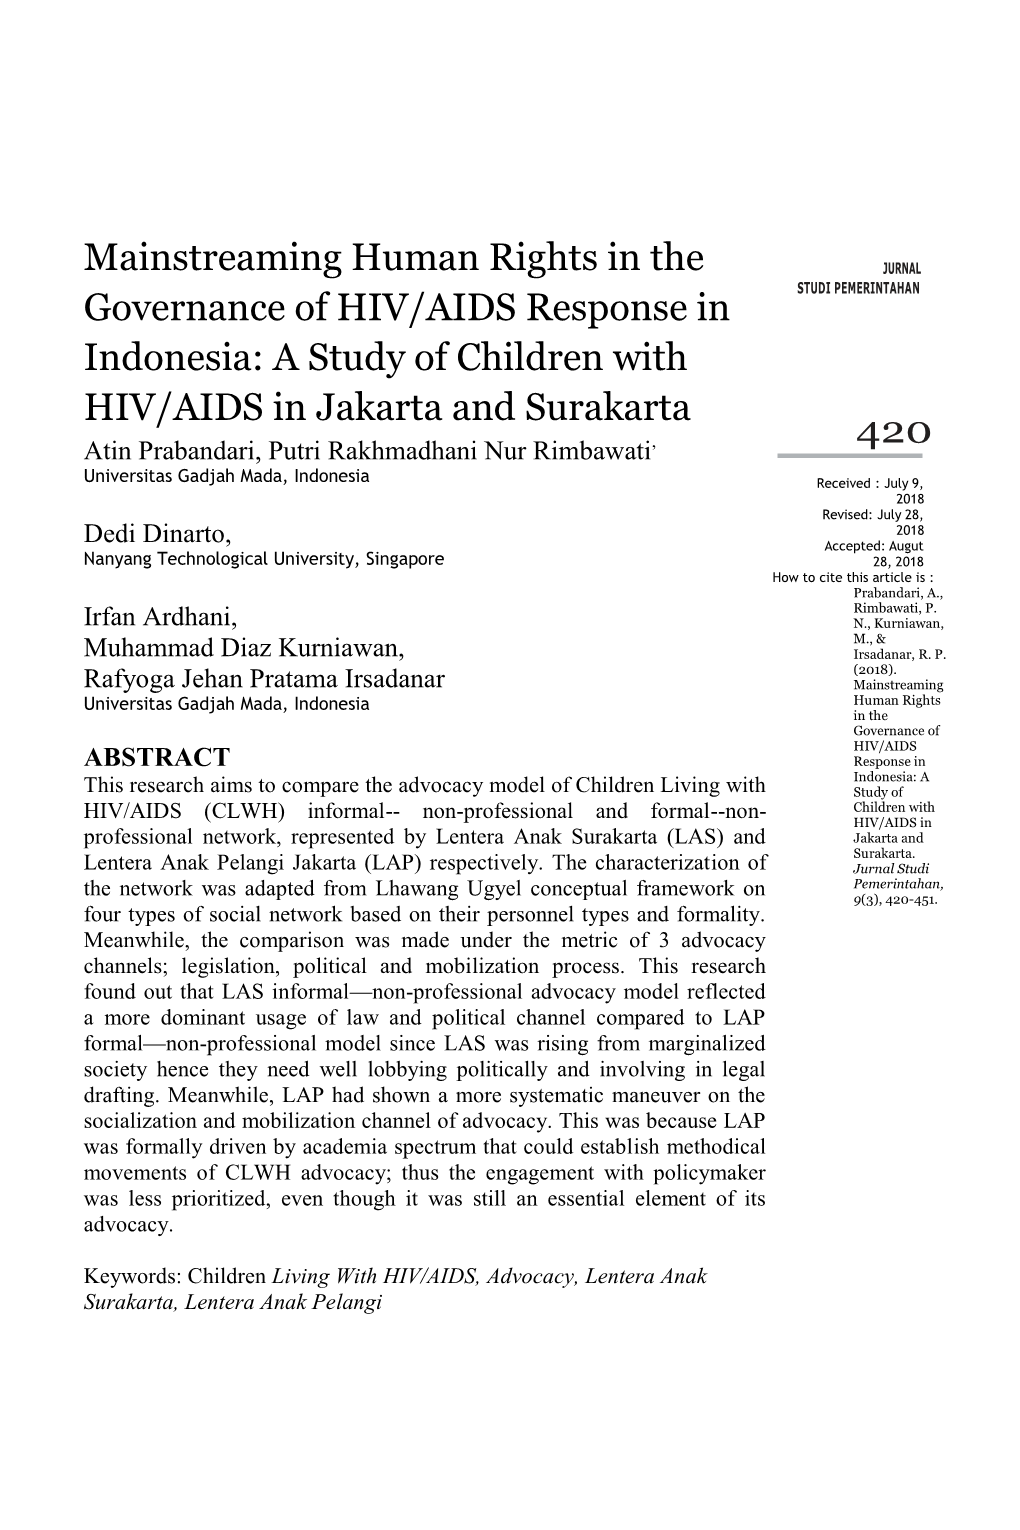 Mainstreaming Human Rights in the JURNAL STUDI PEMERINTAHAN Governance of HIV/AIDS Response In